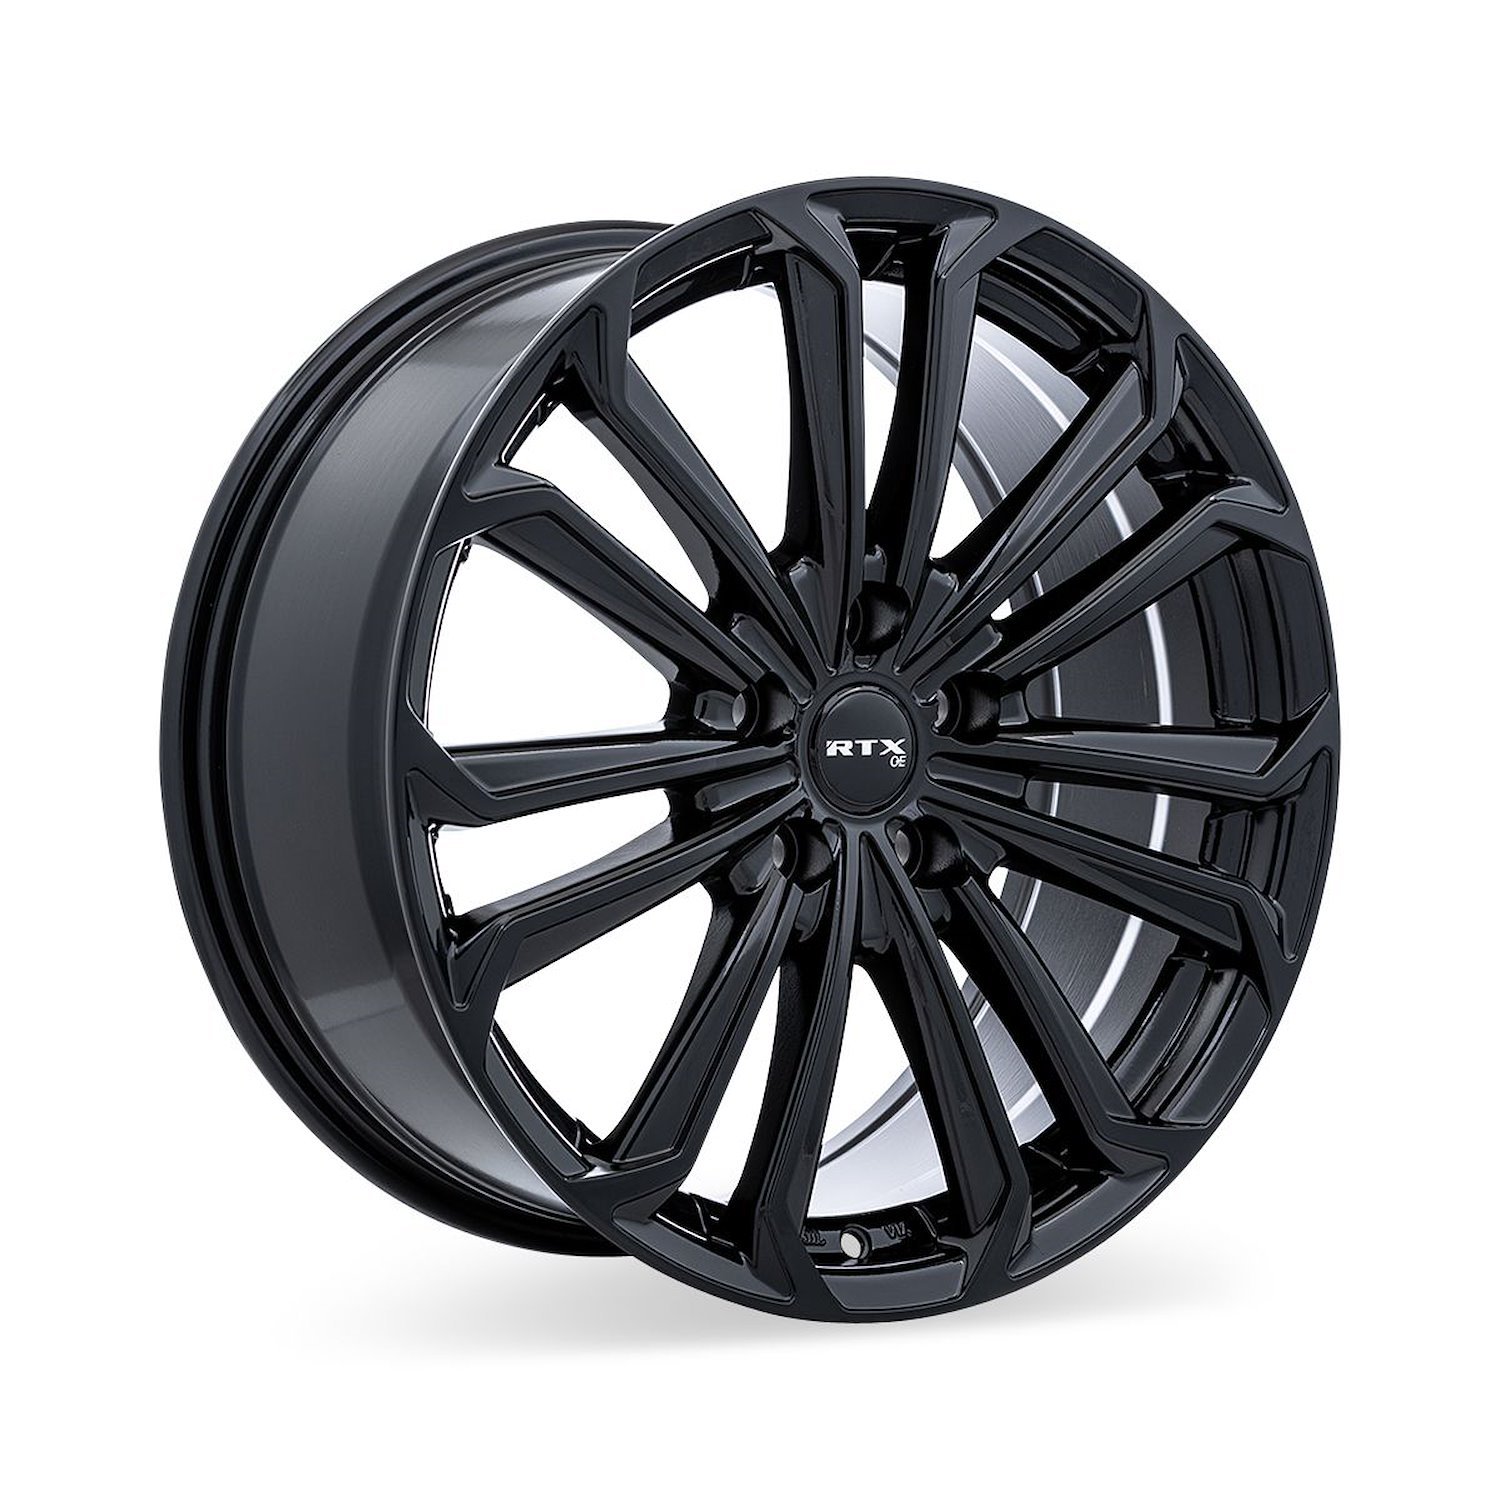 083087 OE-Series Aura Wheel [Size: 16" x 7"] Gloss Black Finish